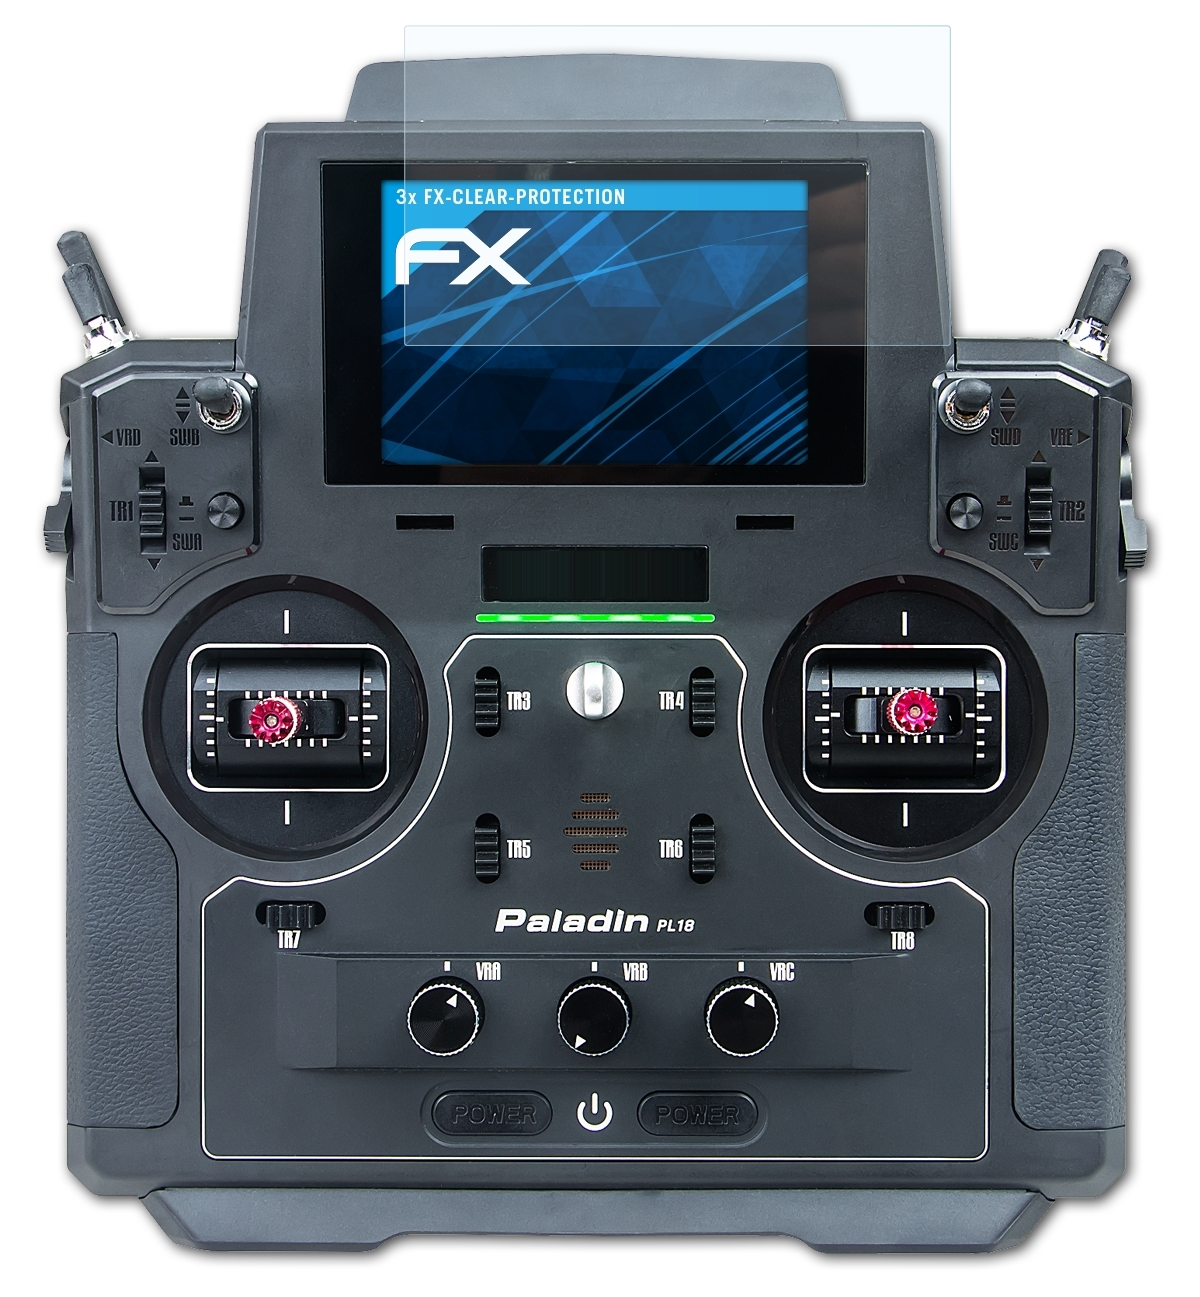 3x FlySky FS-PL18) ATFOLIX FX-Clear Displayschutz(für